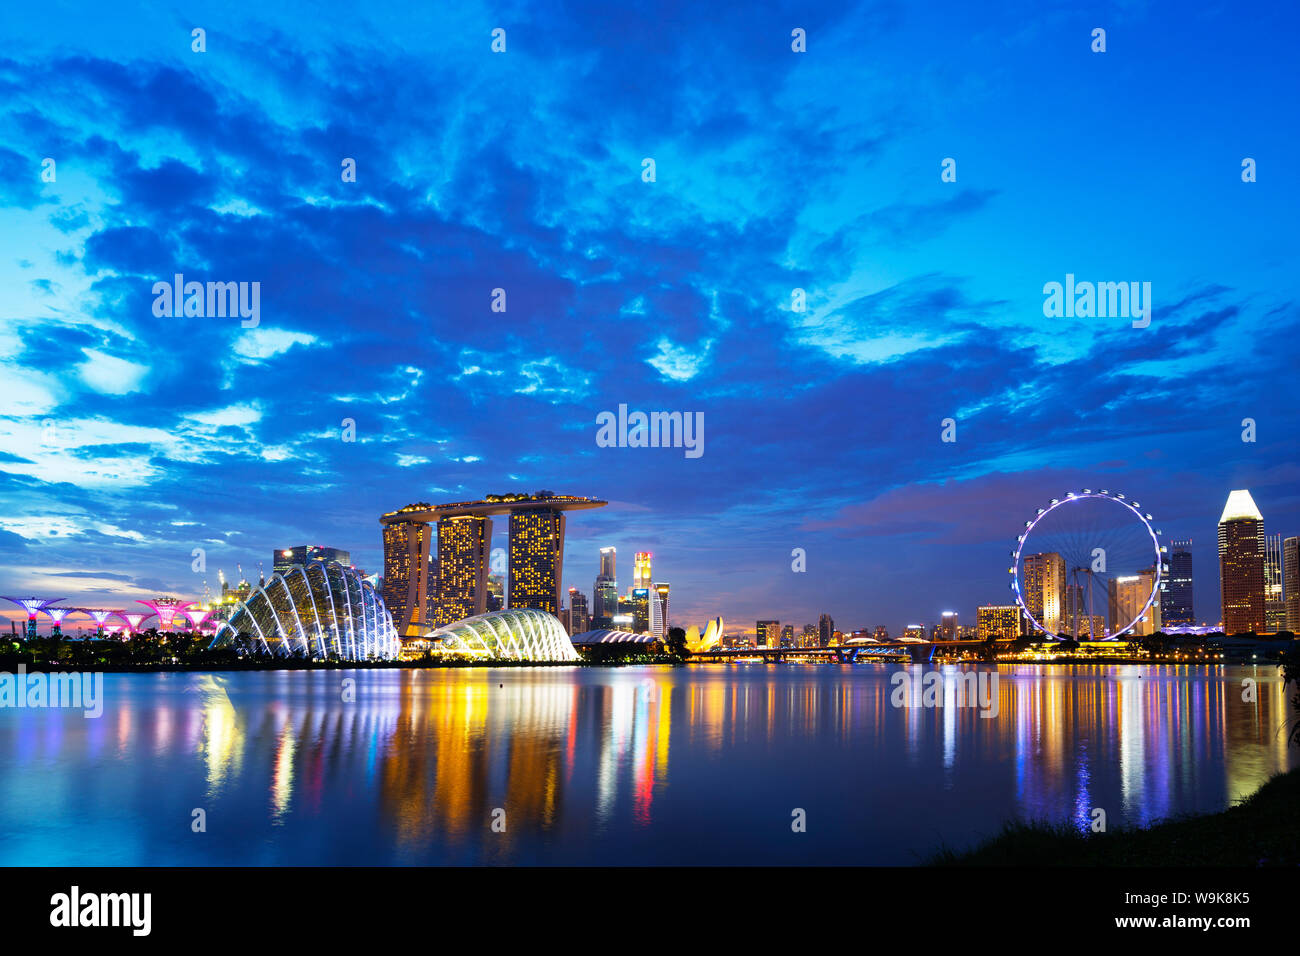 Giardini dalla baia, Cloud Forest, fiore Dome, Marina Bay Sands Hotel e Casinò e Singapore Flyer ruota panoramica Ferris, Singapore, Sud-est asiatico, in Asia Foto Stock